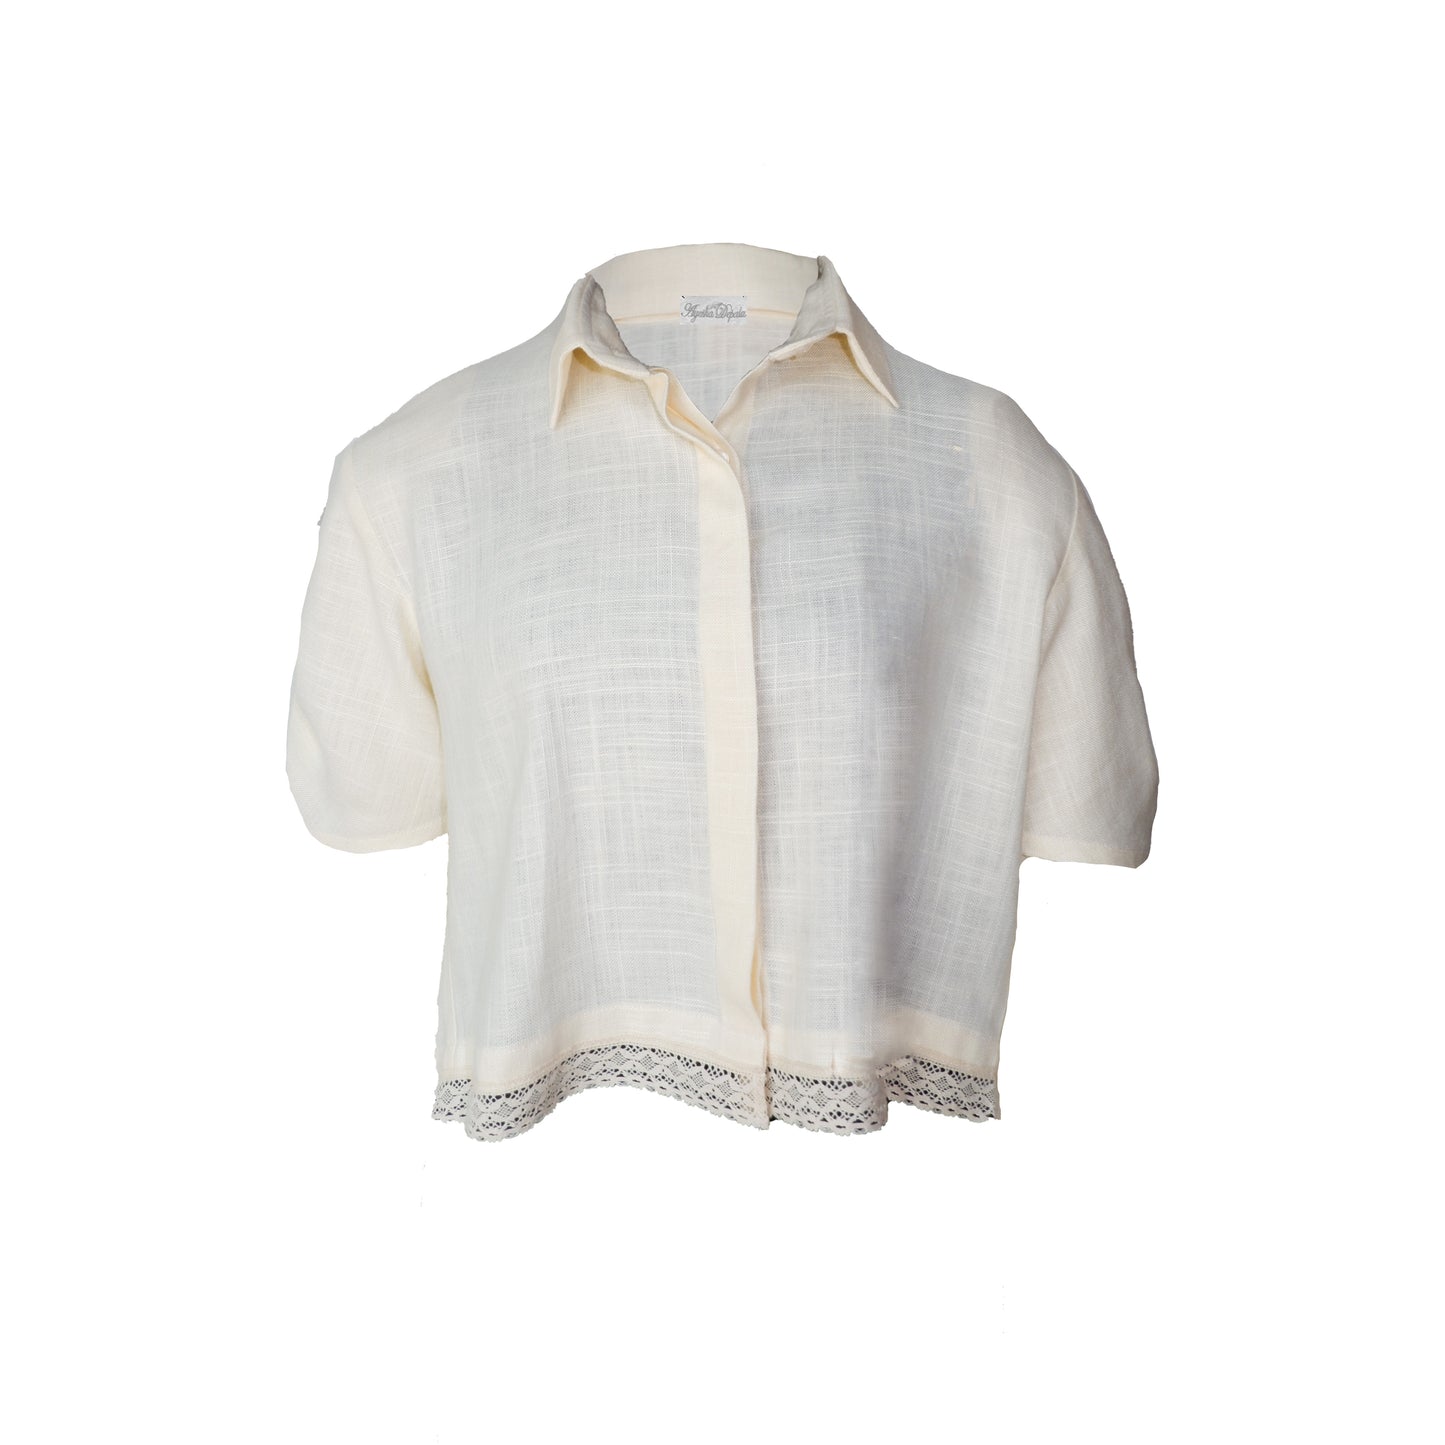 Buttercream Linen Shirt with Lace